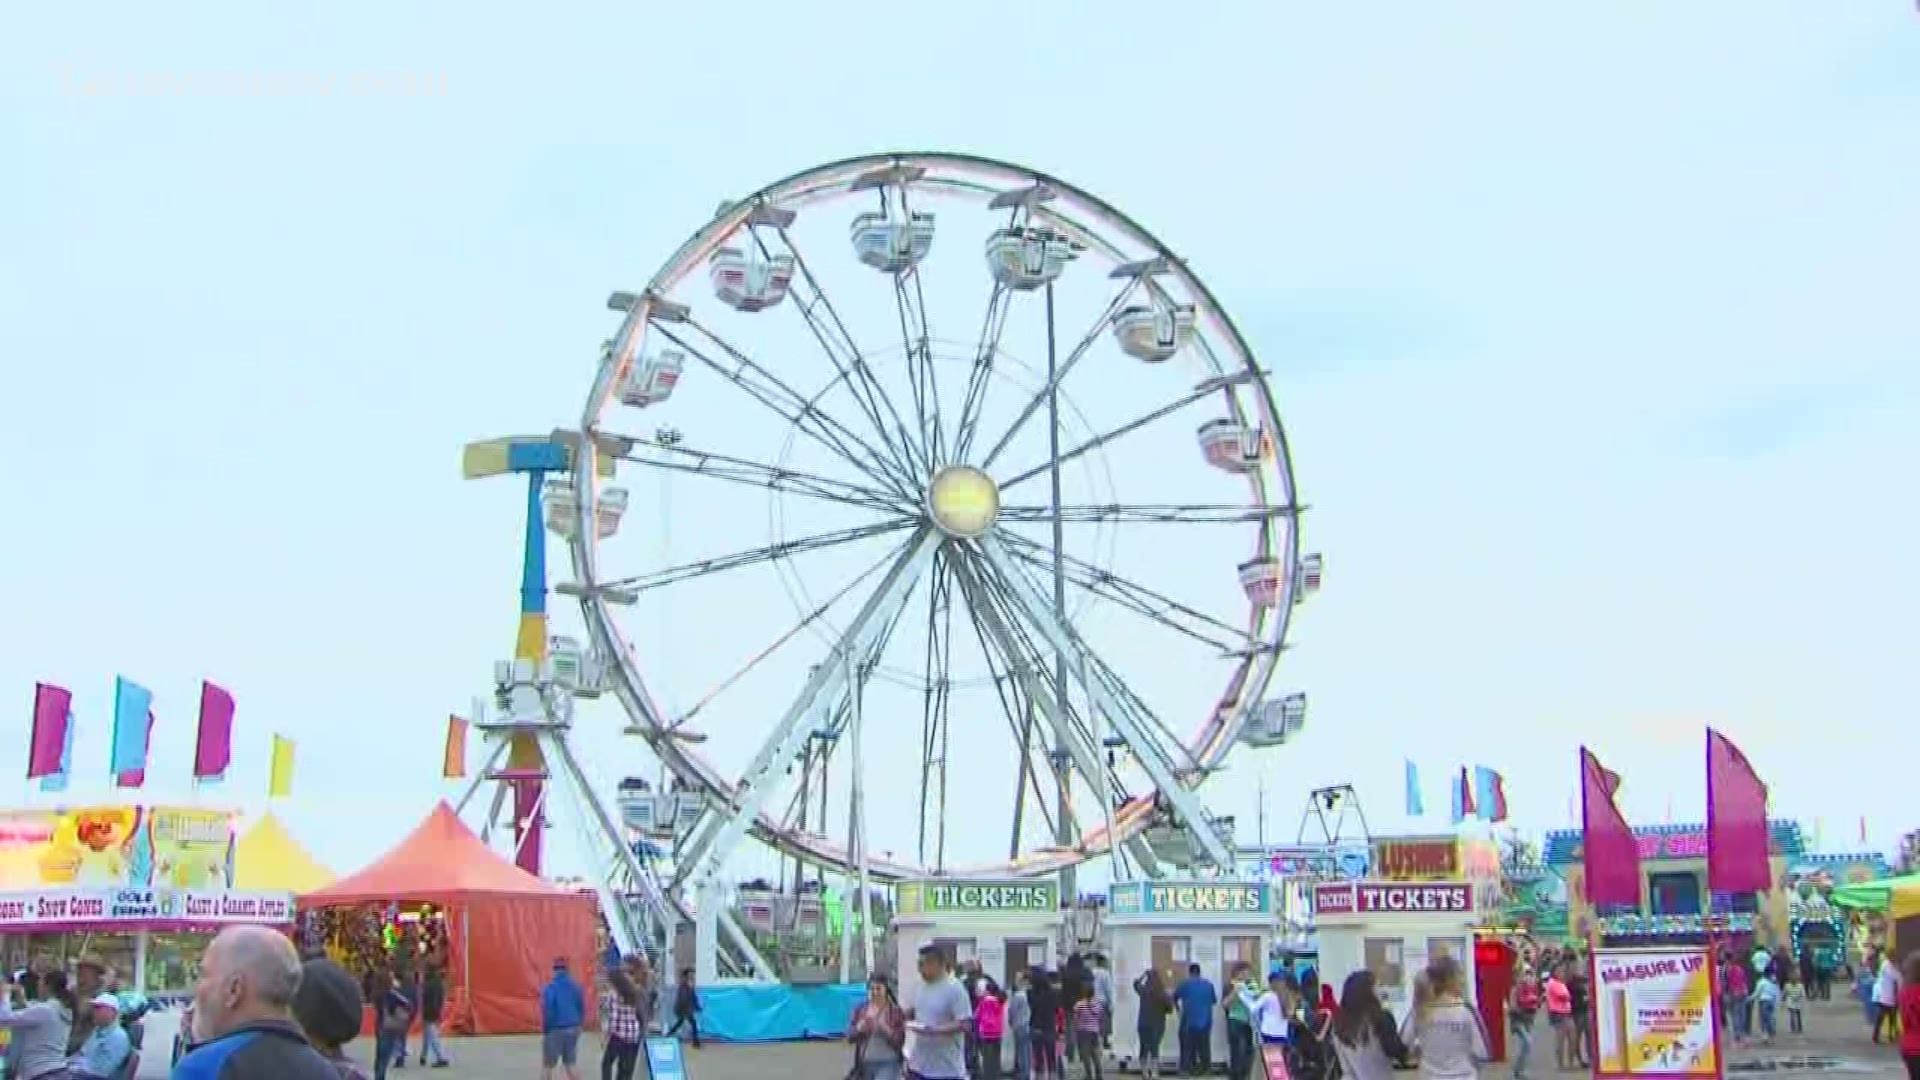 The fair will run from March 21 through March 29.